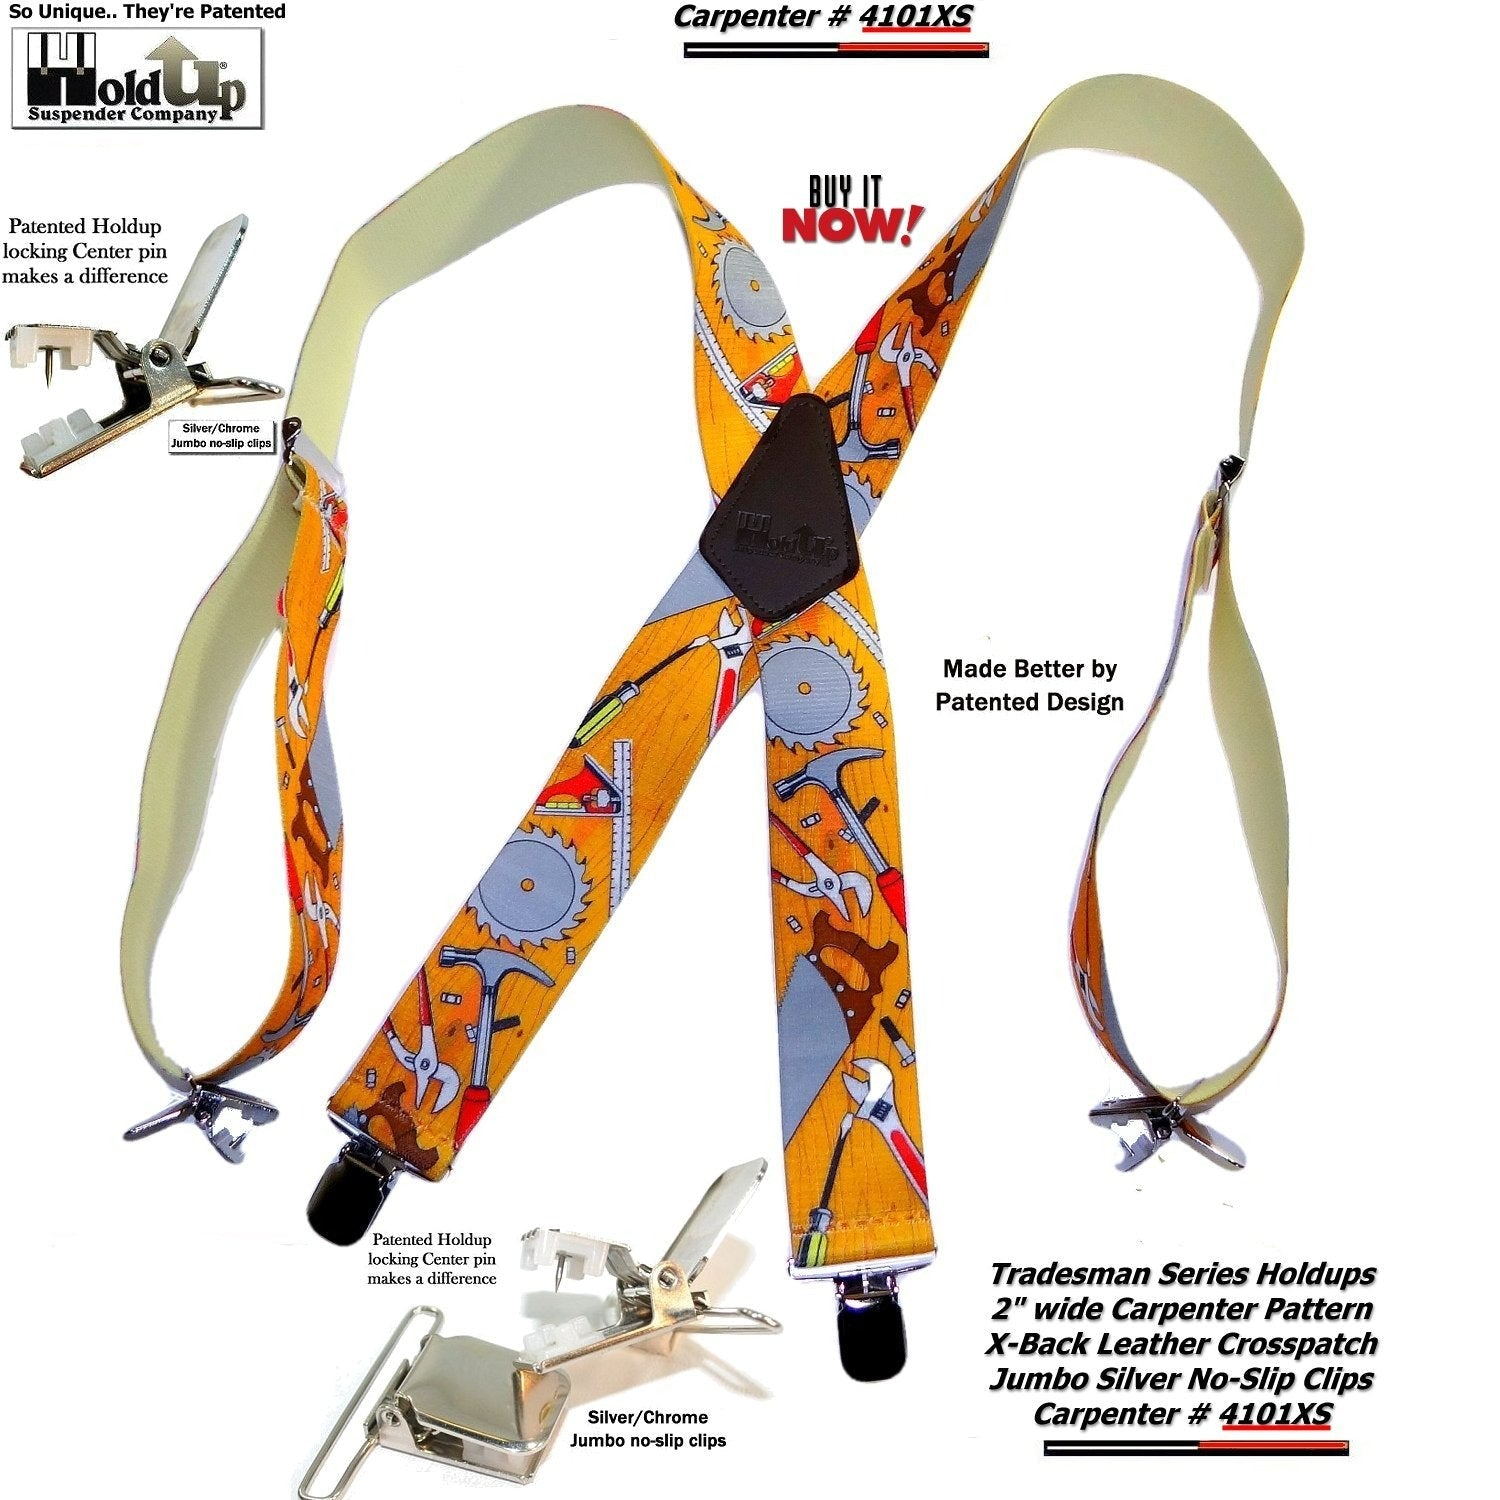 Strap Men's Suspenders Clips Elastic Belt Hanging Pants Clip Adjustable  Braces